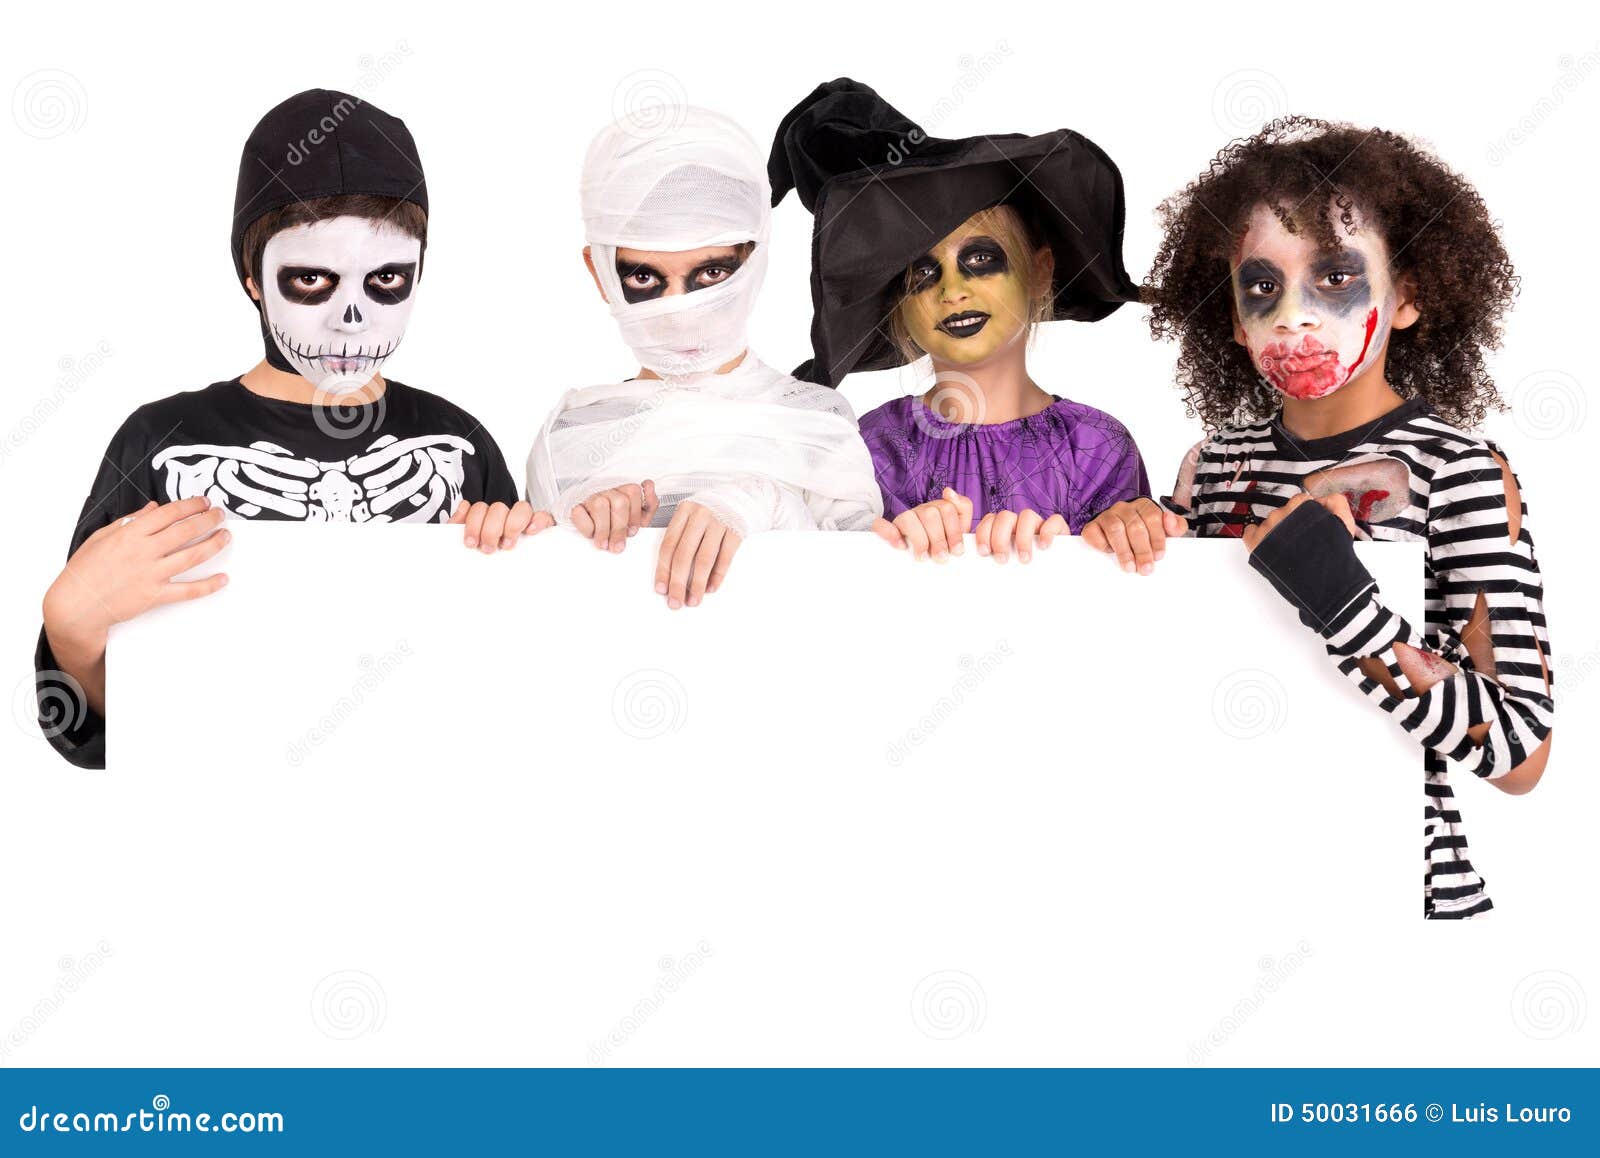 Kids in Halloween costumes stock photo. Image of people - 50031666